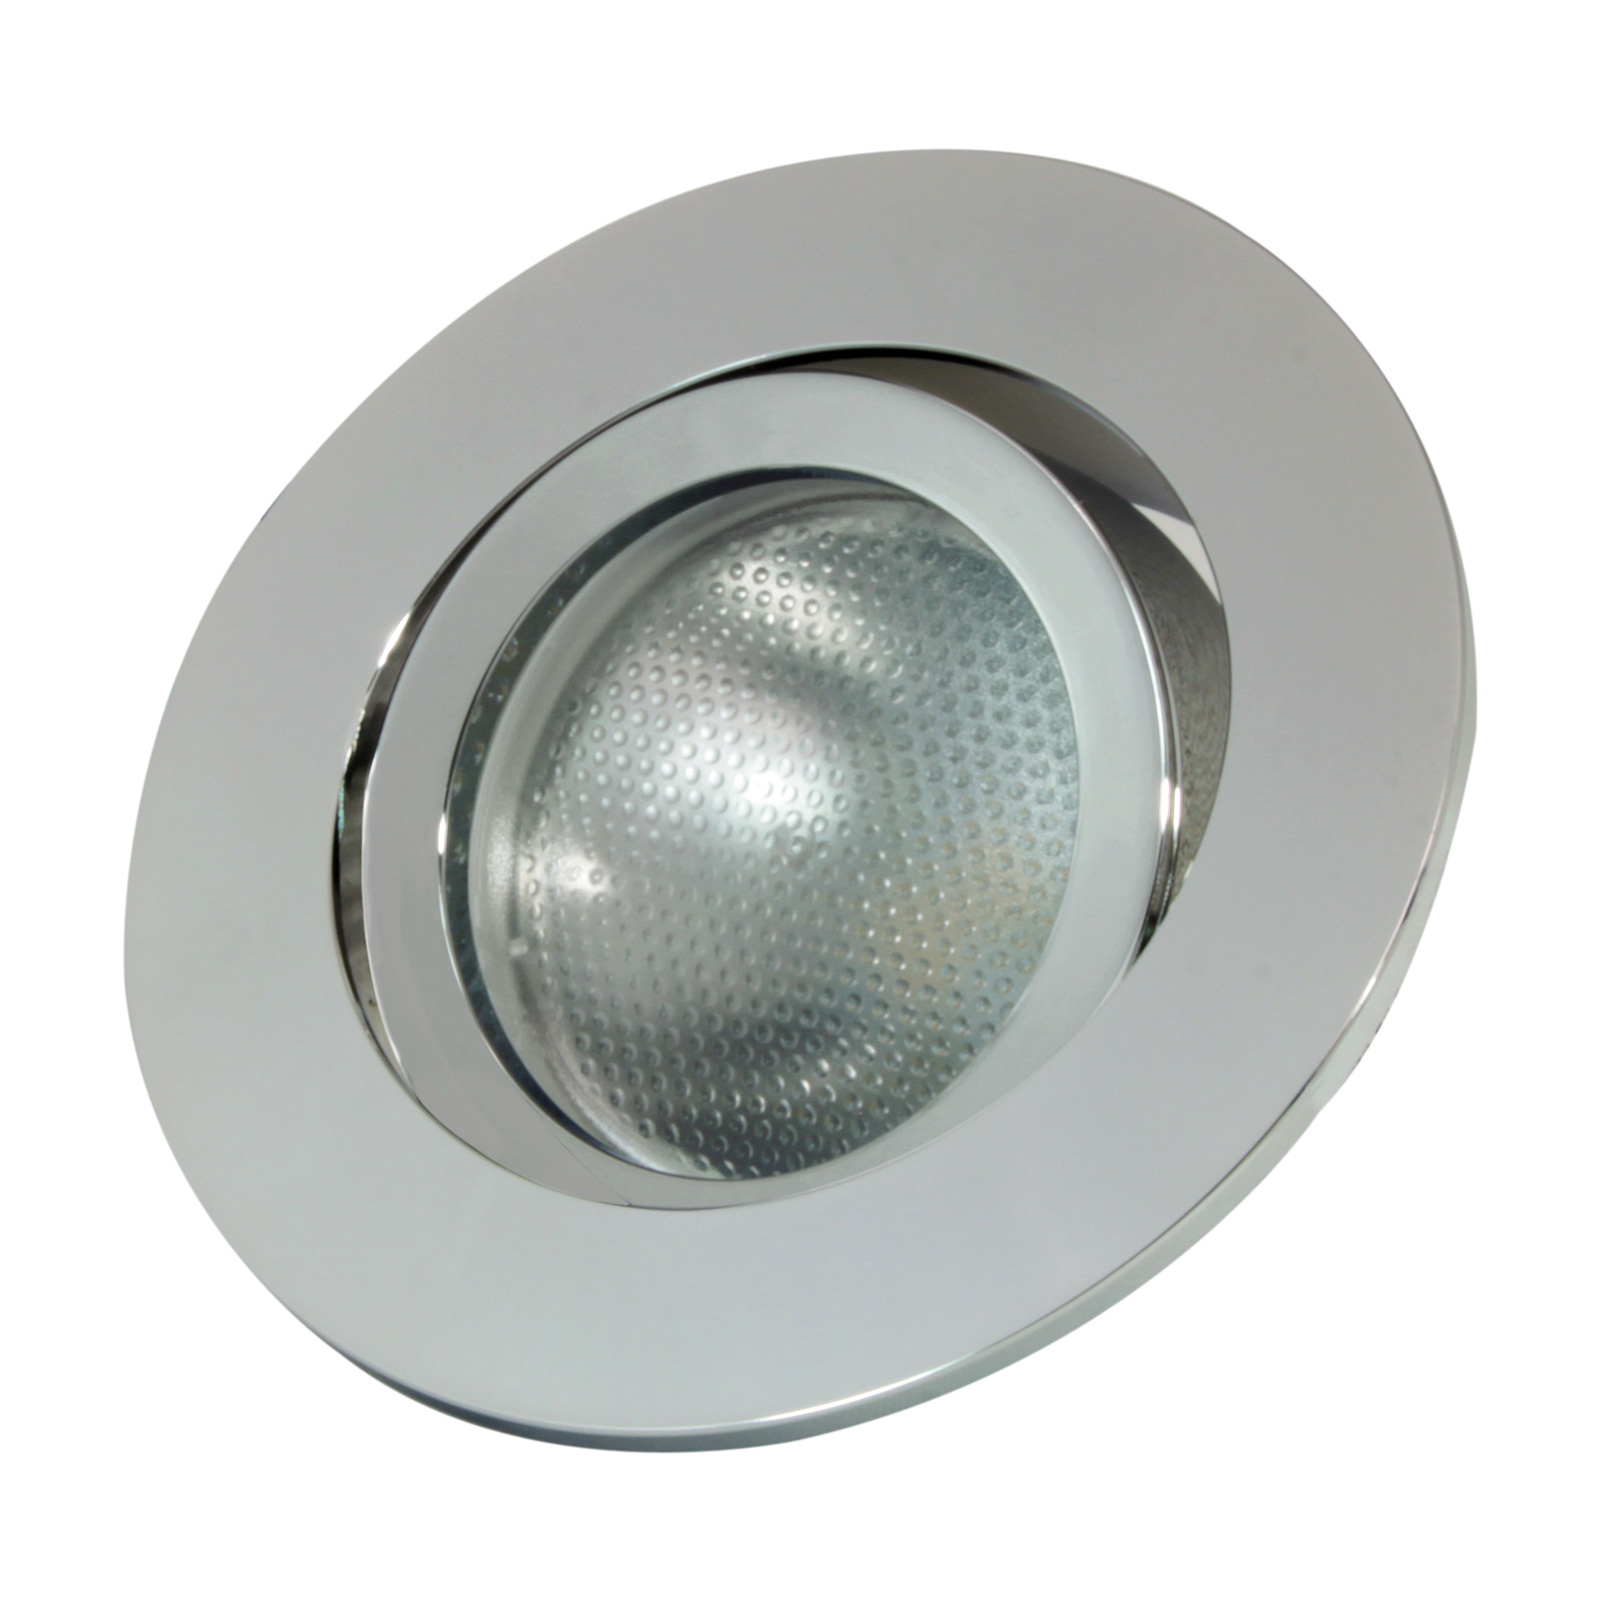 LED uppoasennusrengas Decoclic GU10/GU5.3, pyöreä, hopea